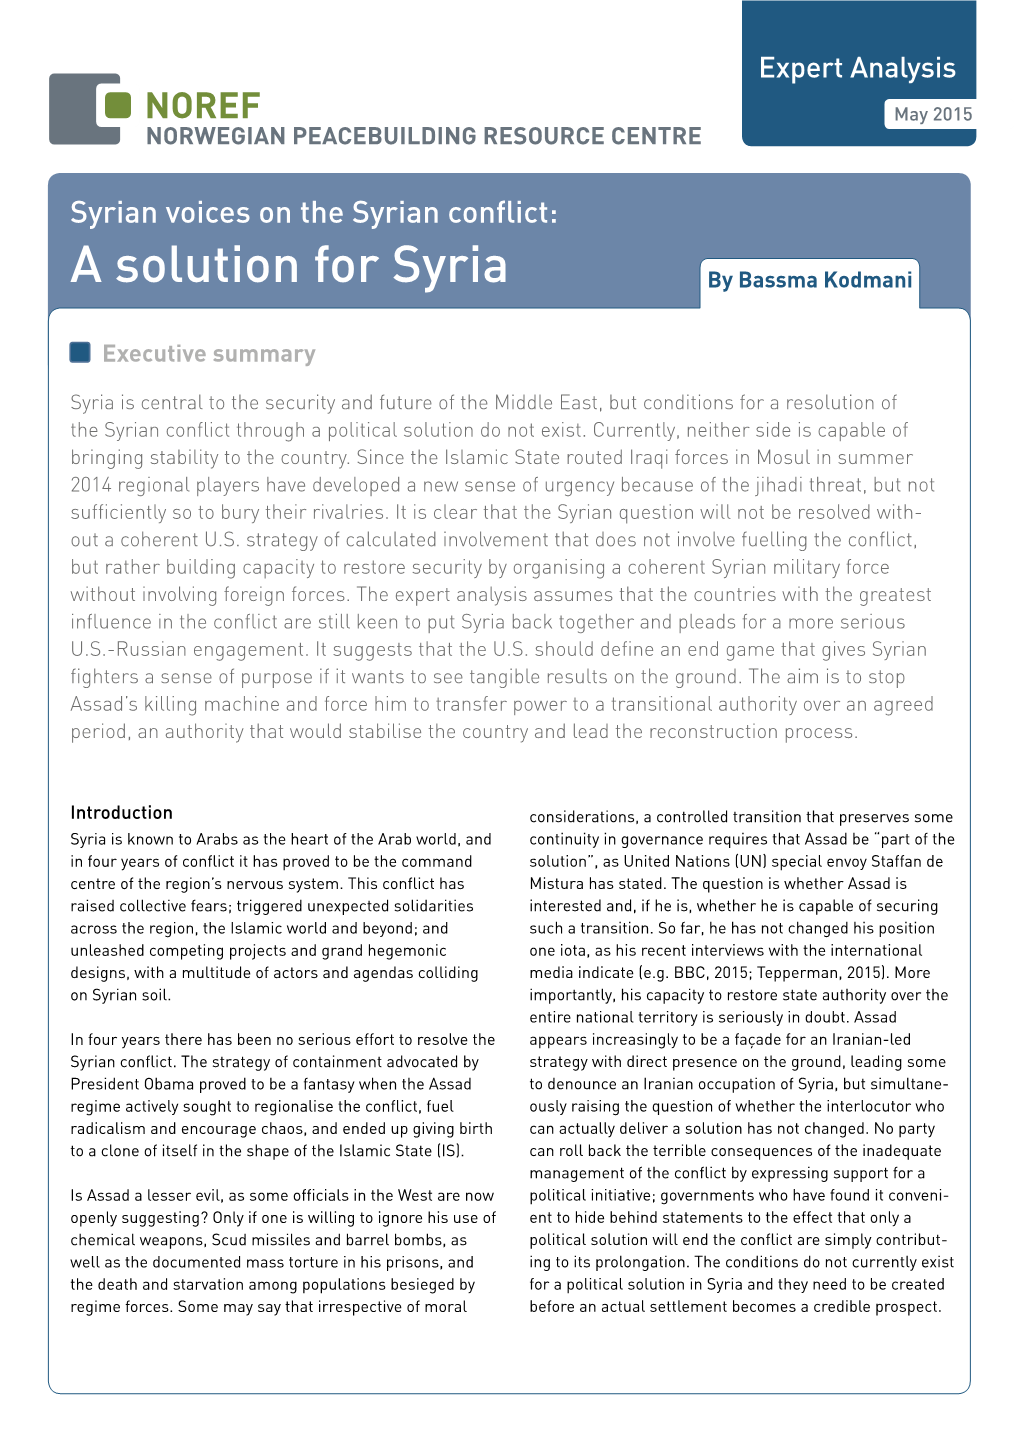 A Solution for Syria by Bassma Kodmani